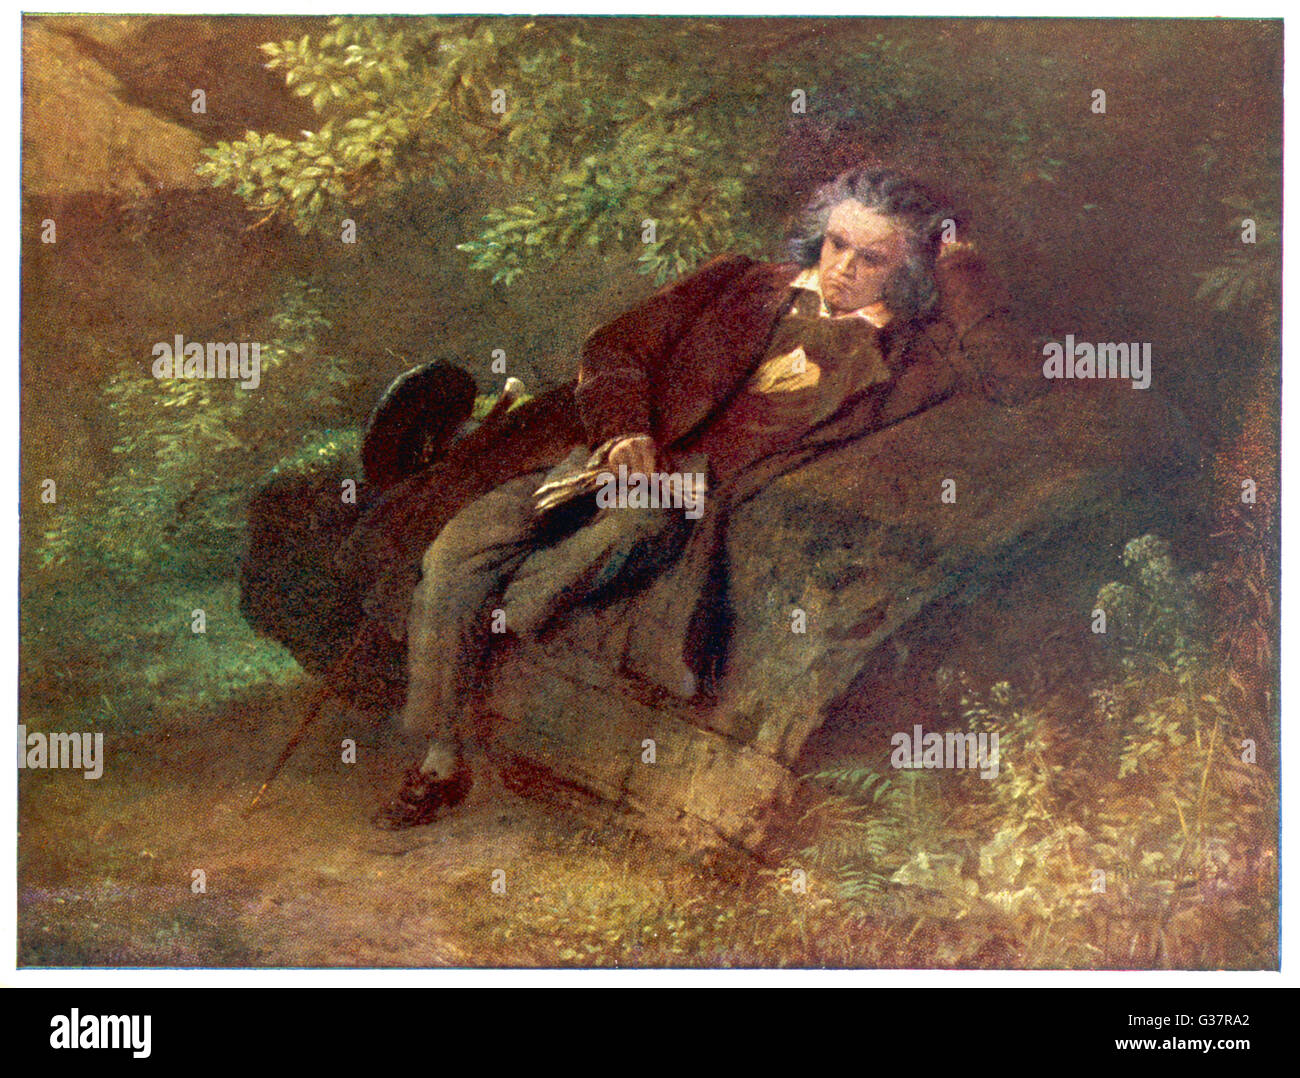 LUDWIG VAN BEETHOVEN  Beethoven sitting in some  woods       Date: 1770 - 1827 Stock Photo